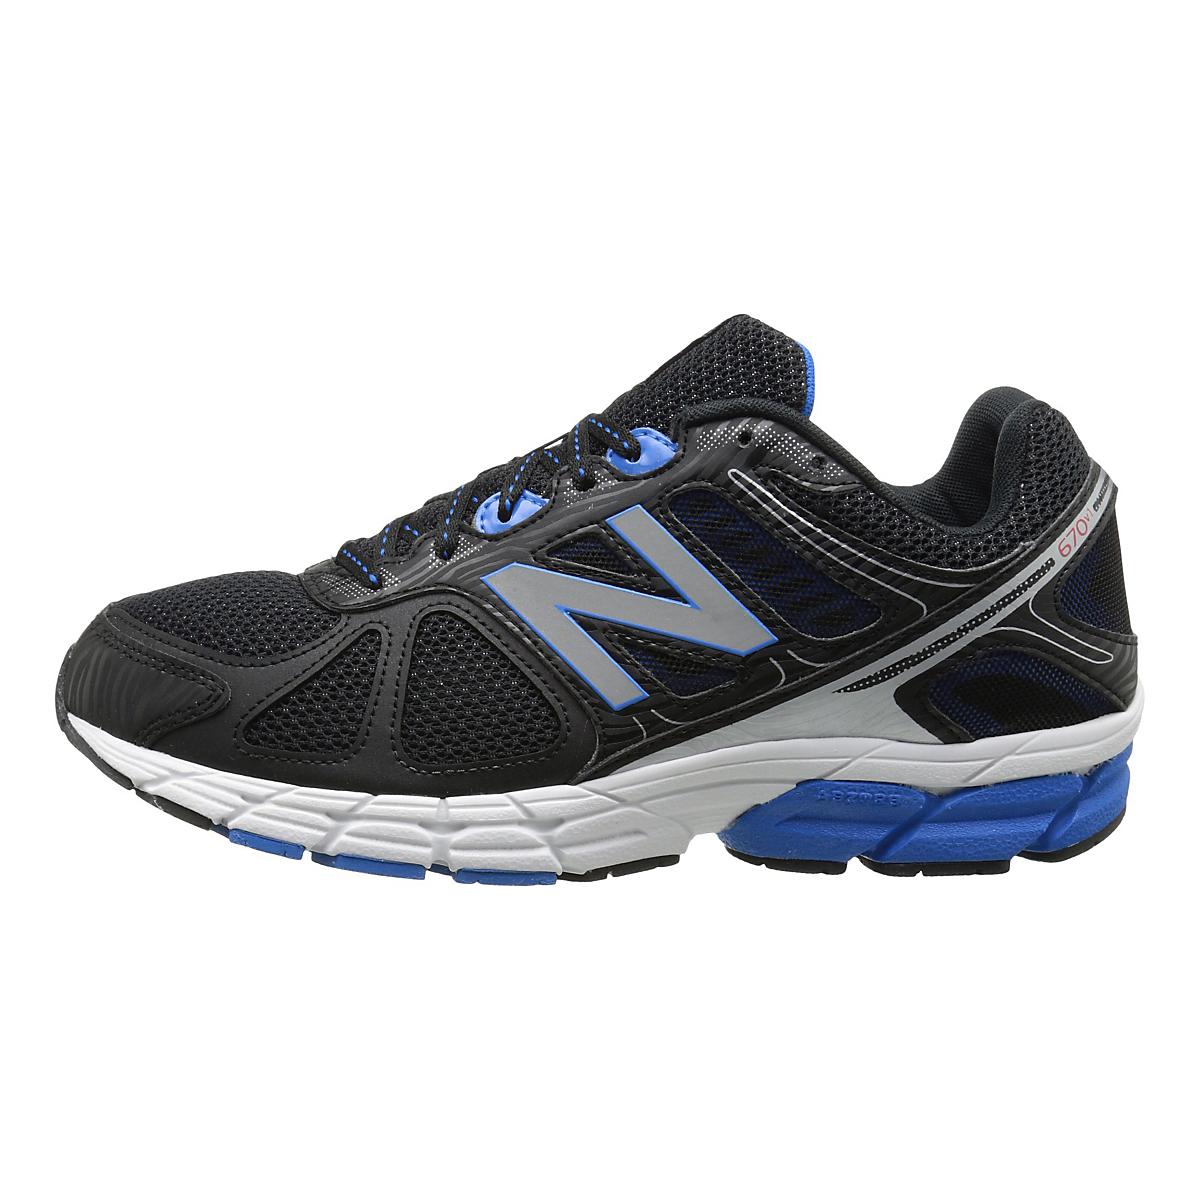 Mens New Balance 1080v3 Running Shoe at Road Runner Sports